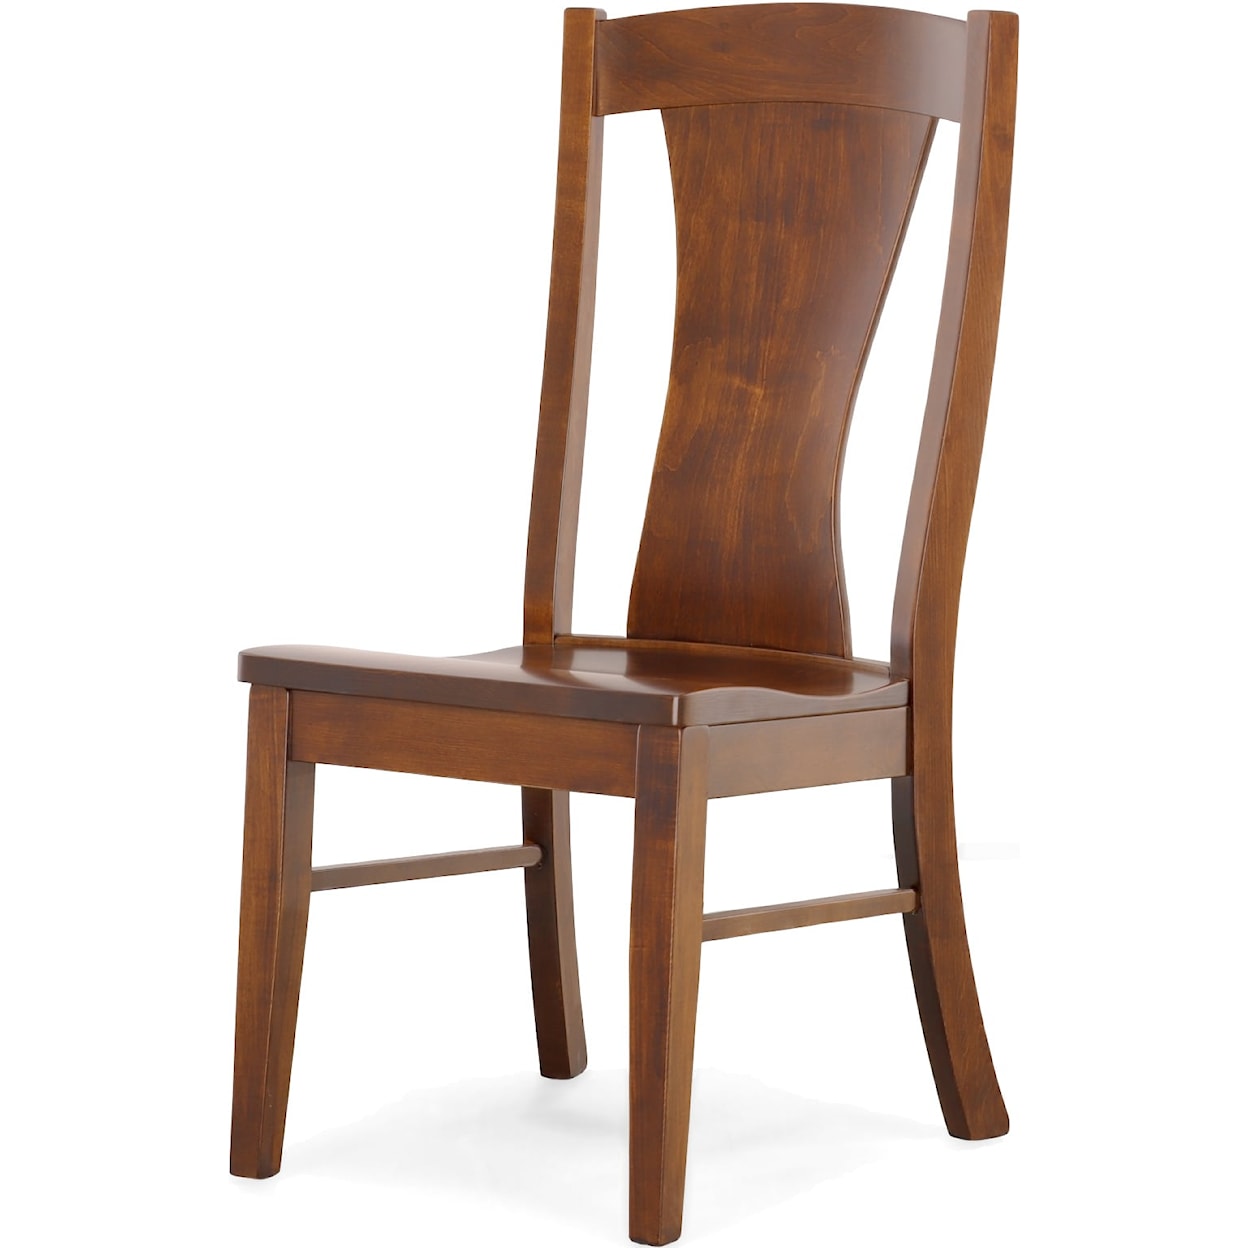 Archbold Furniture Amish Essentials Casual Dining Samuel Chair